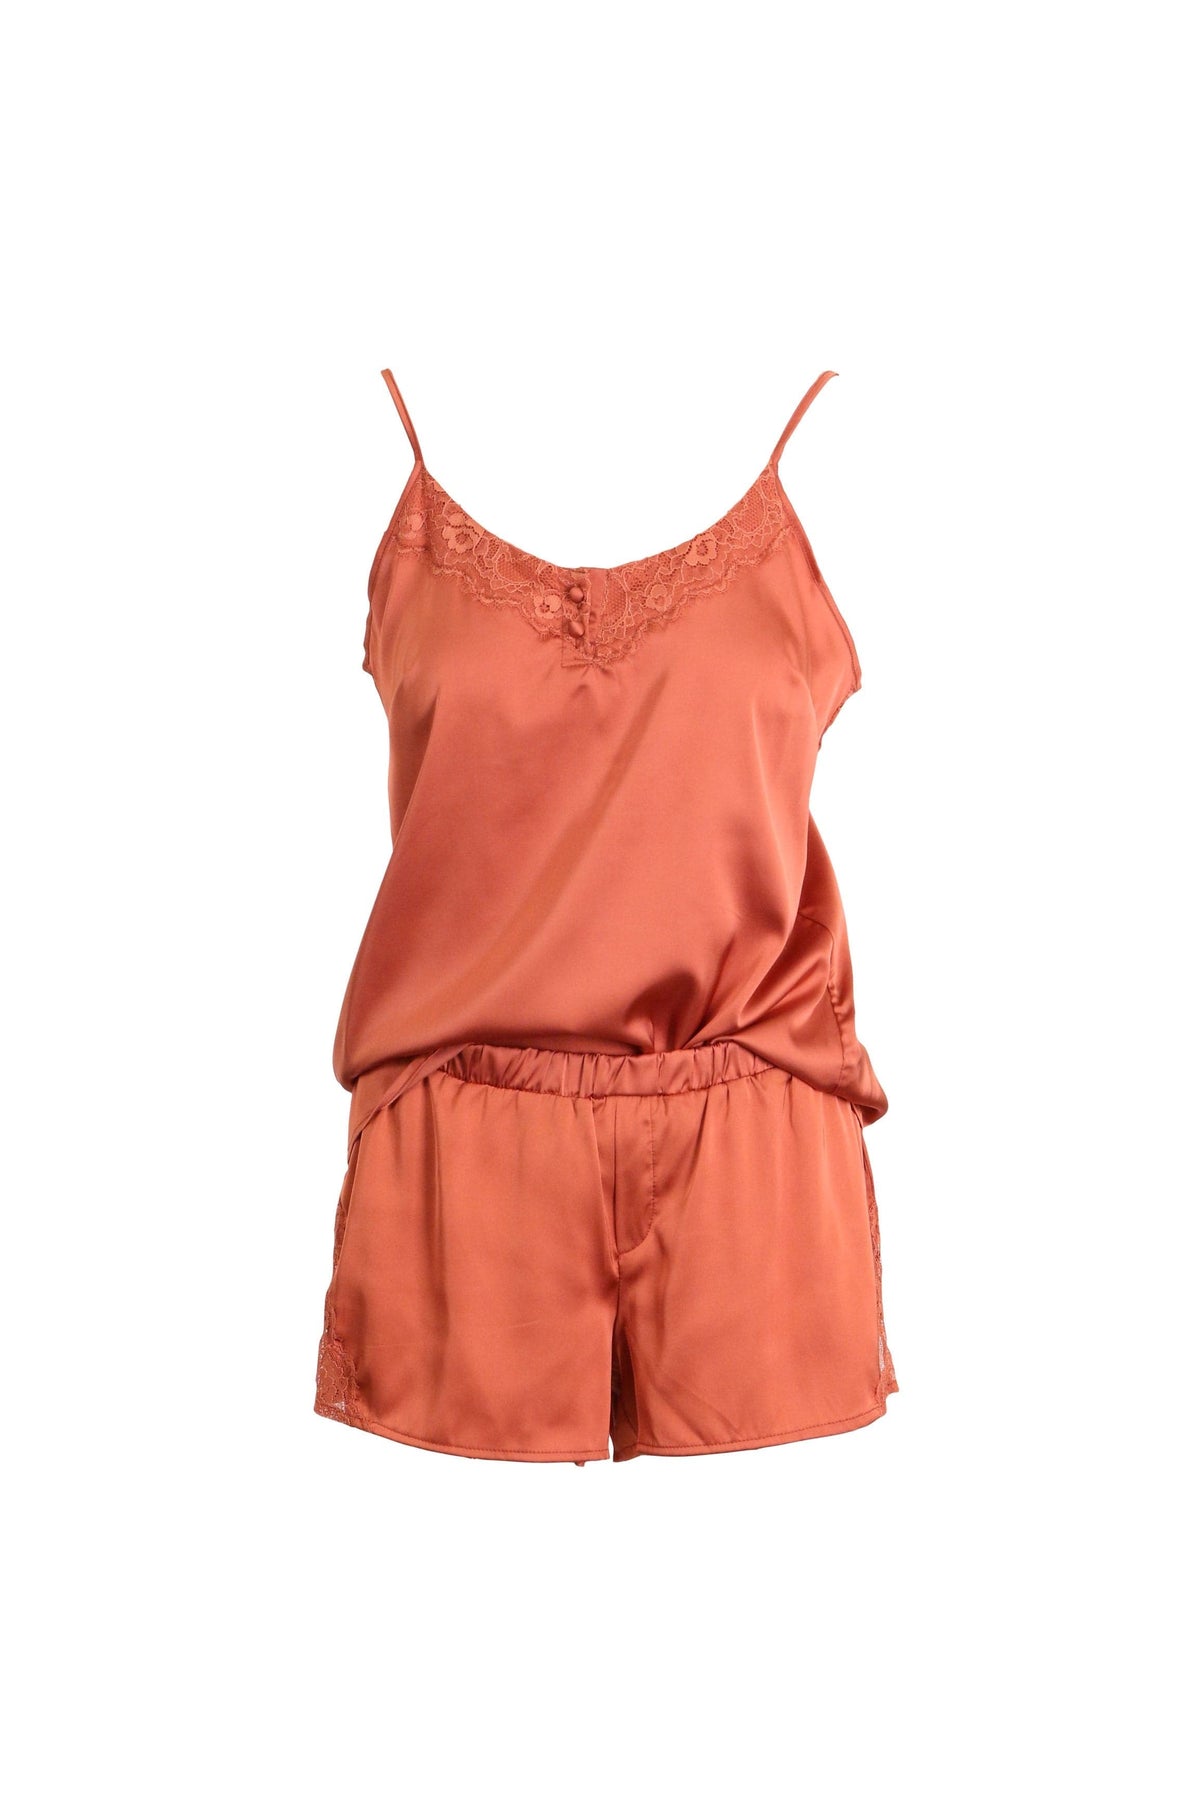 iCollection Pajama Set Plus Size Constance Cami Set- Copper